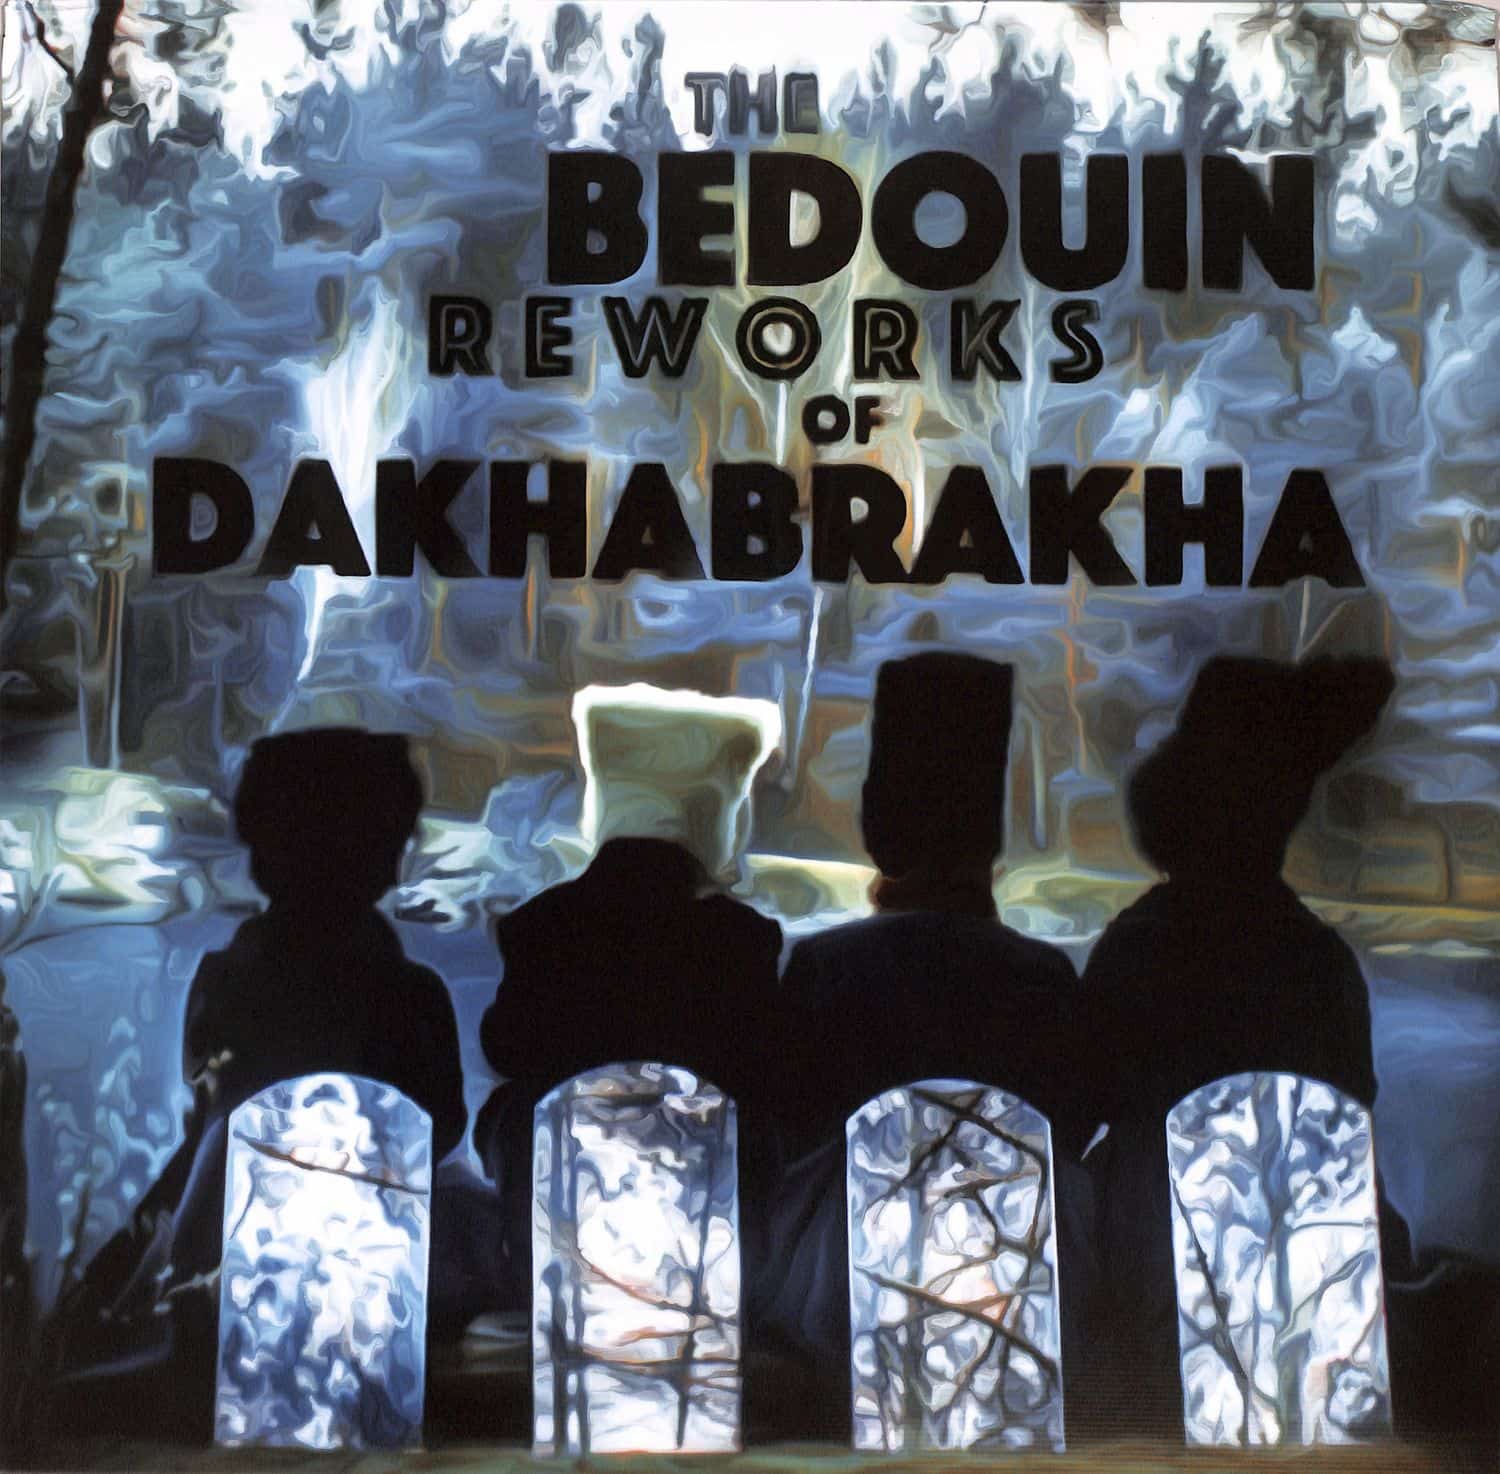 DakhaBrakha Bedouin - THE BEDOUIN REWORKS OF DAKHABRAKHA